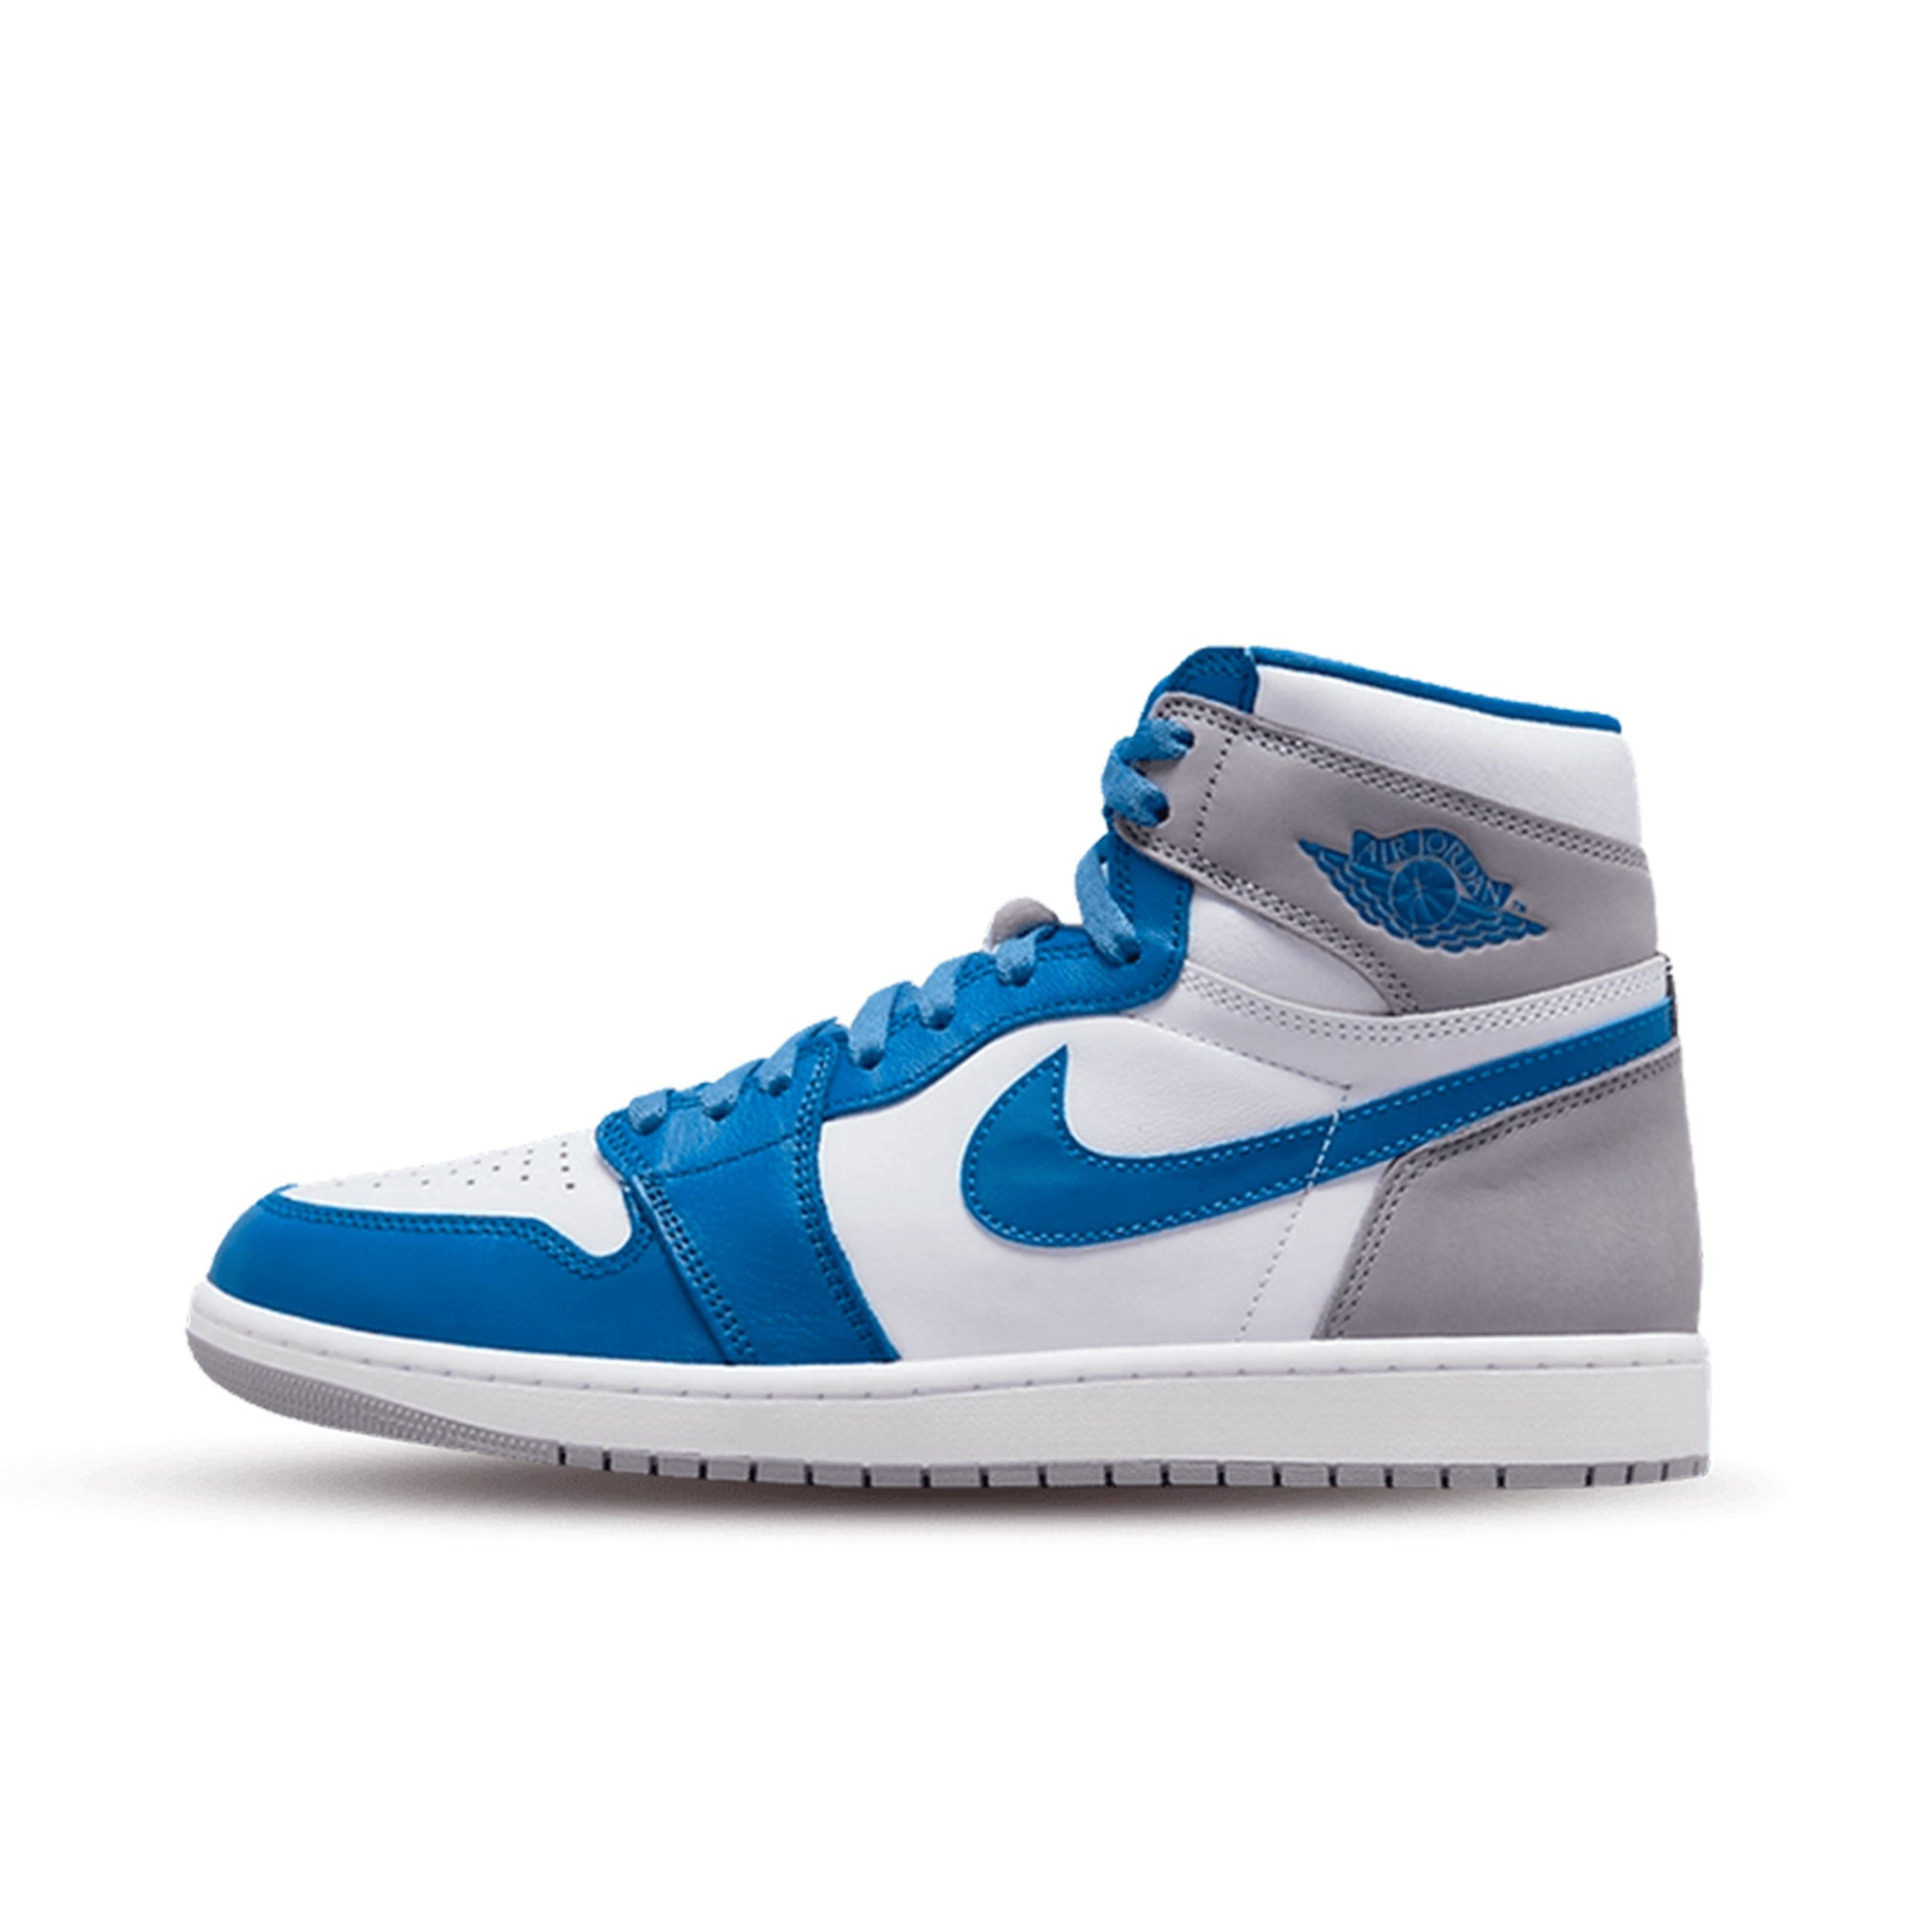 Nike Air jordan 1 retro high og true blue